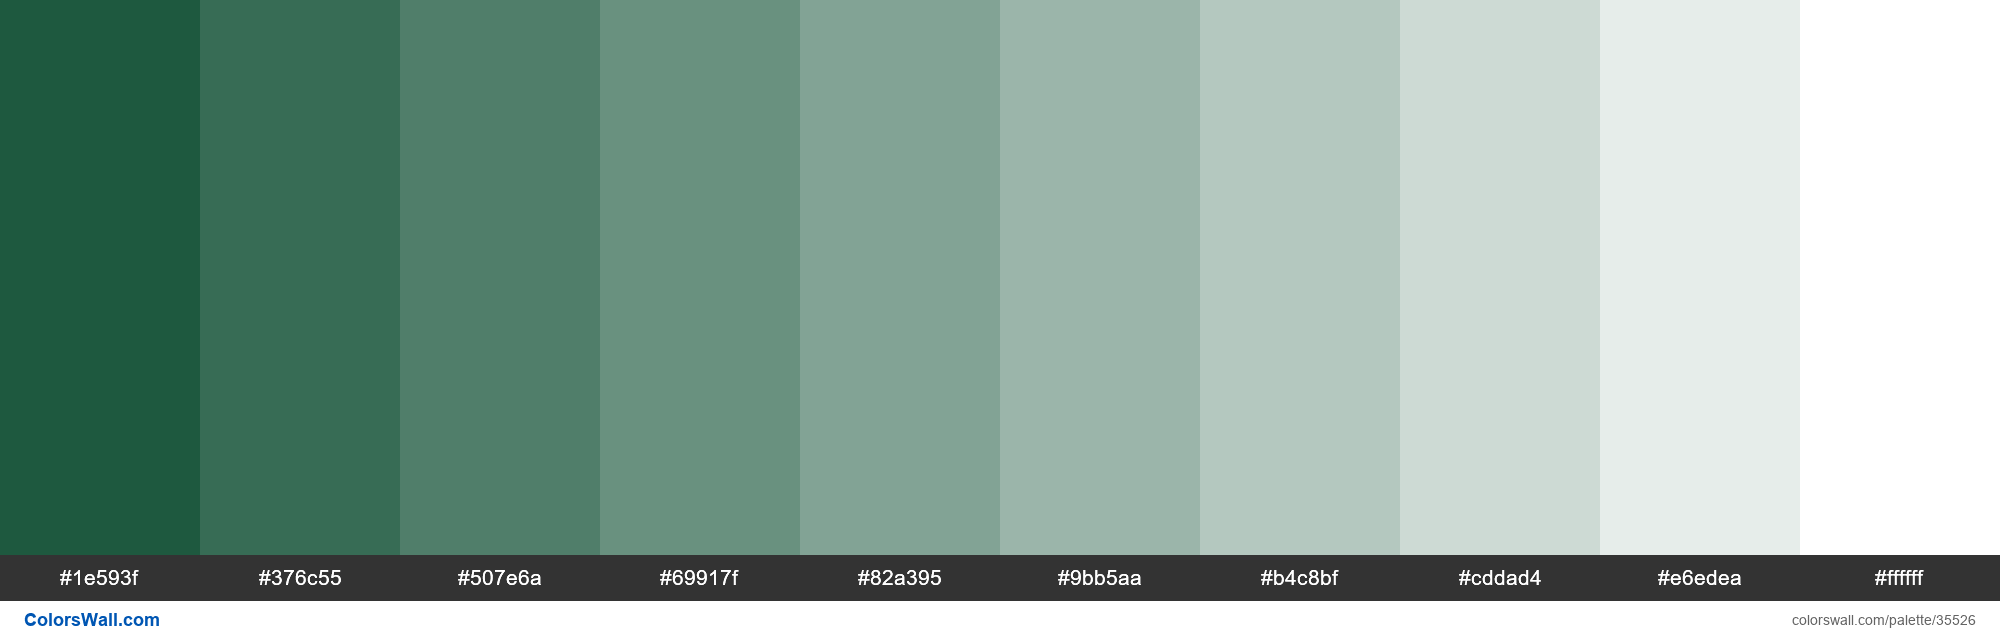 Shades XKCD Color gunmetal #536267 hex colors palette - ColorsWall